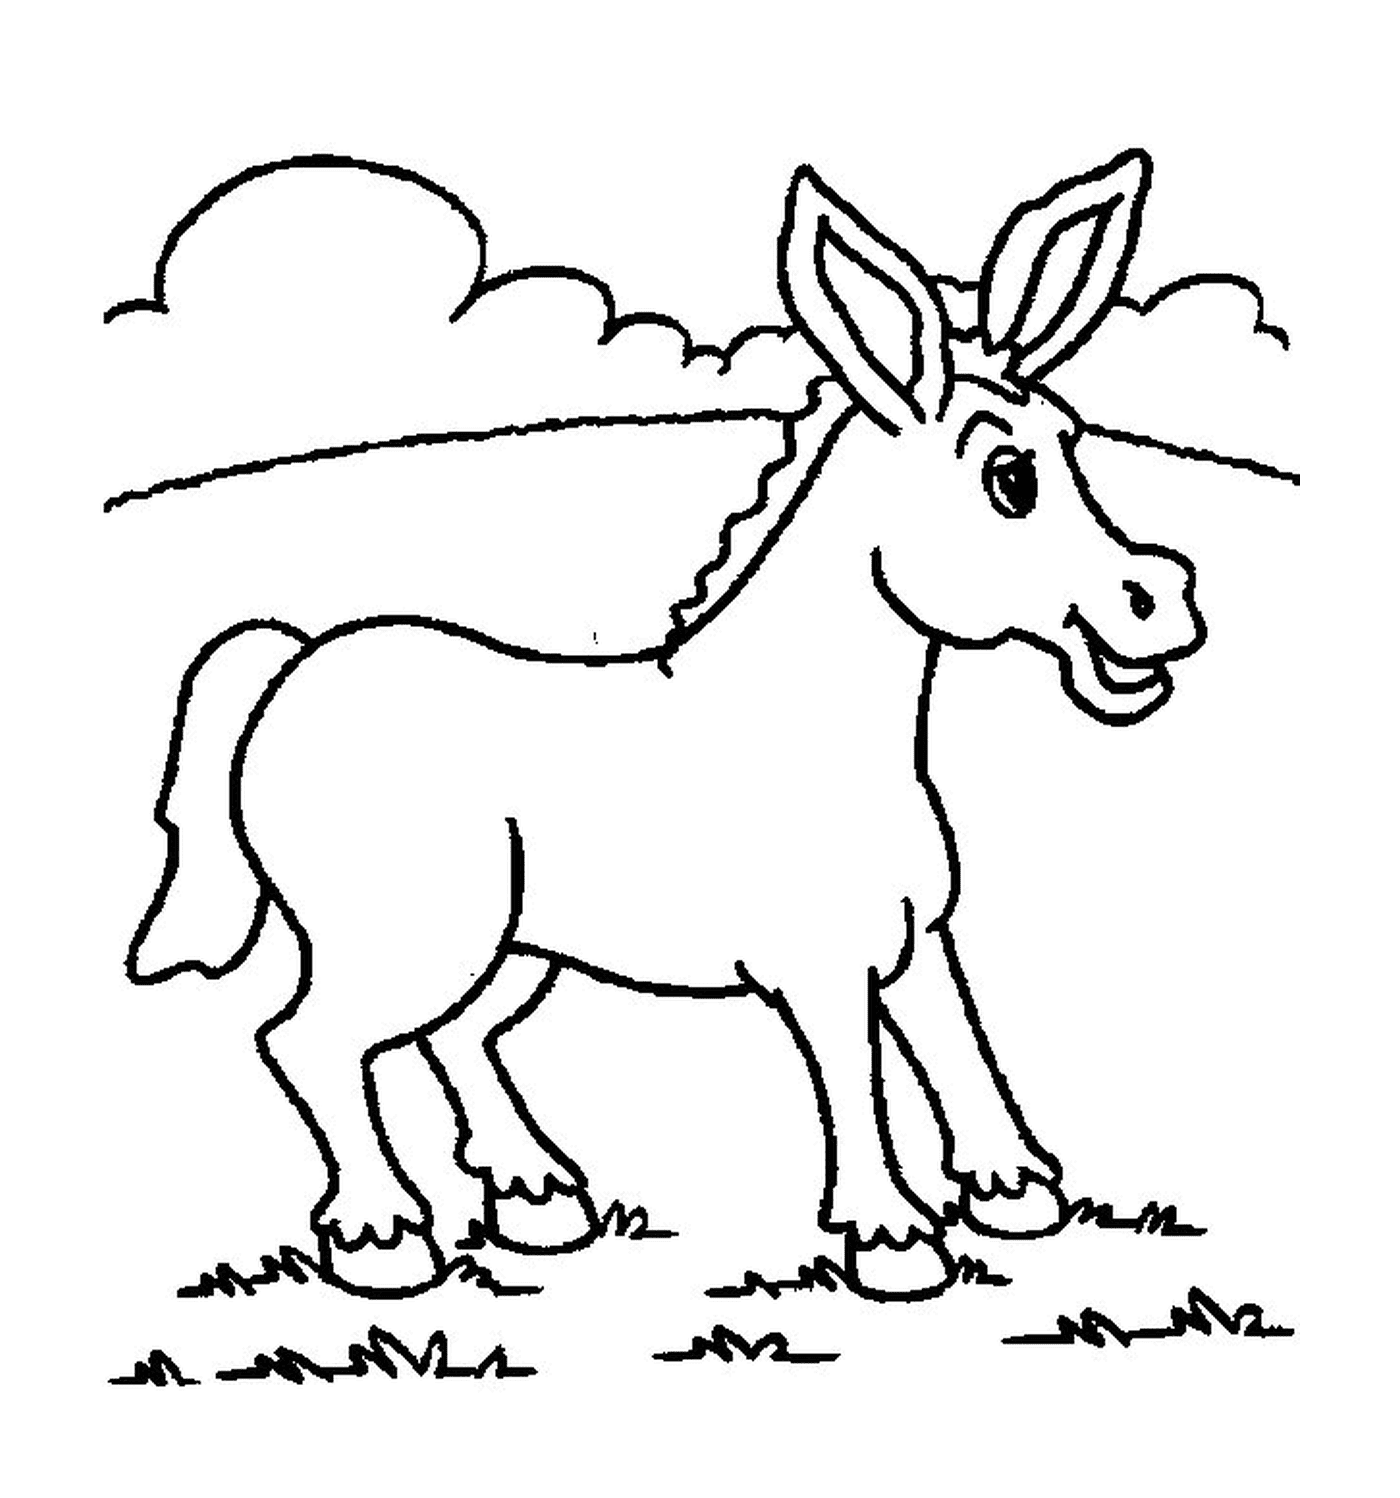  Una imagen de un burro 